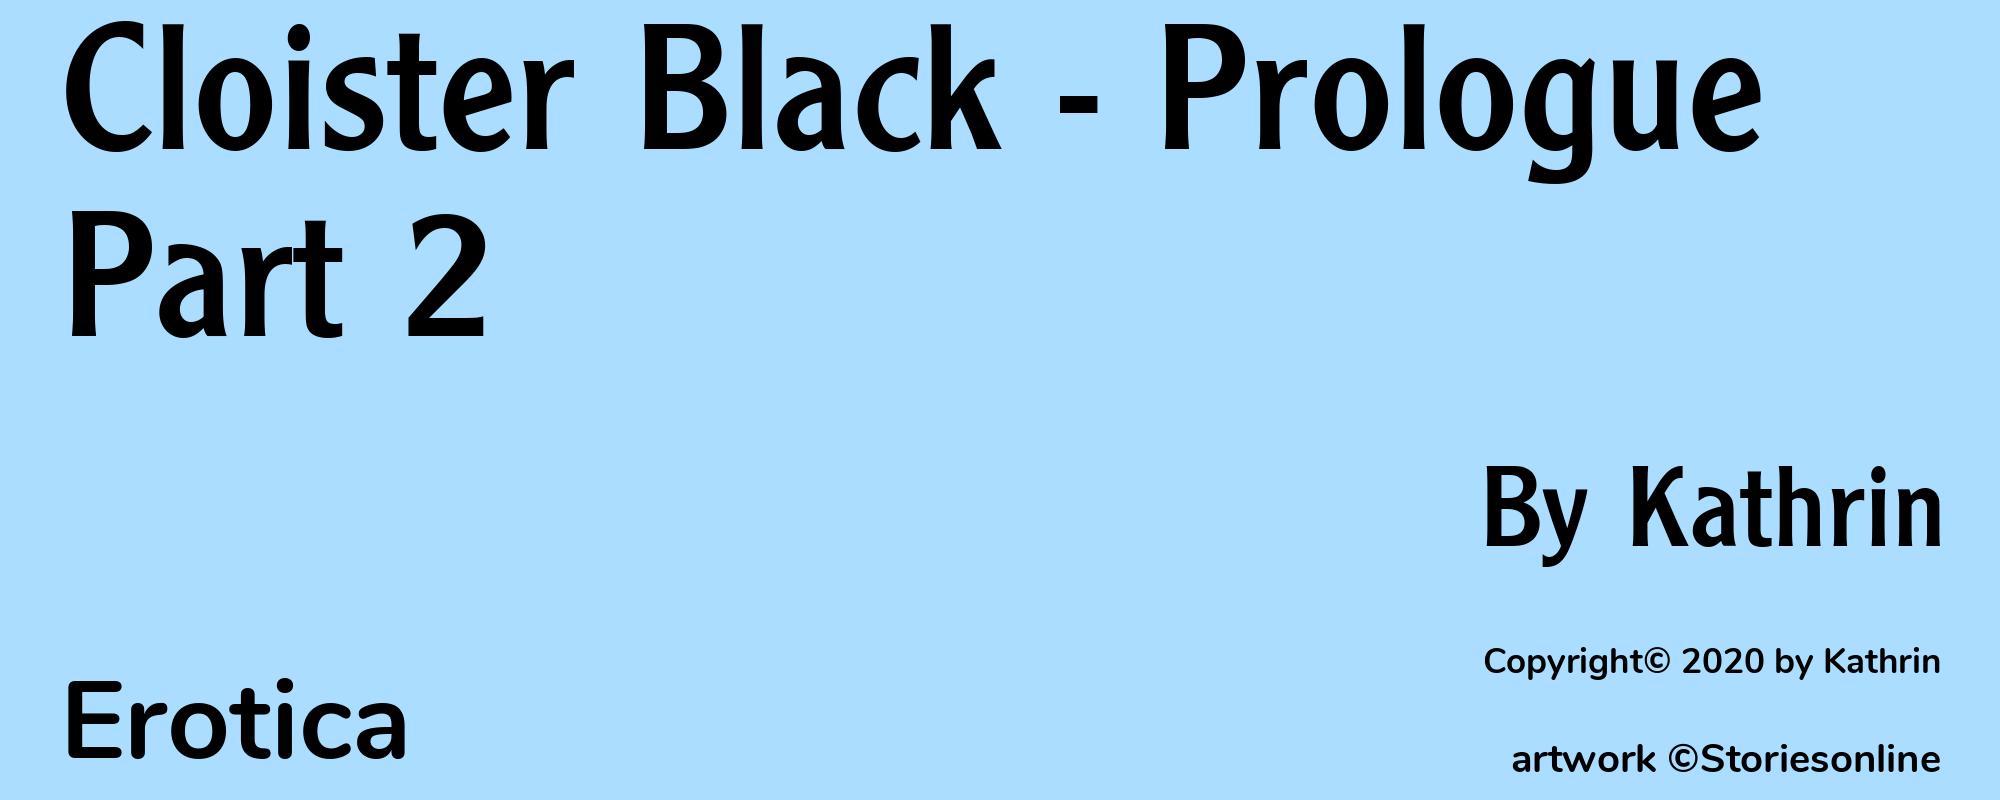 Cloister Black - Prologue Part 2 - Cover